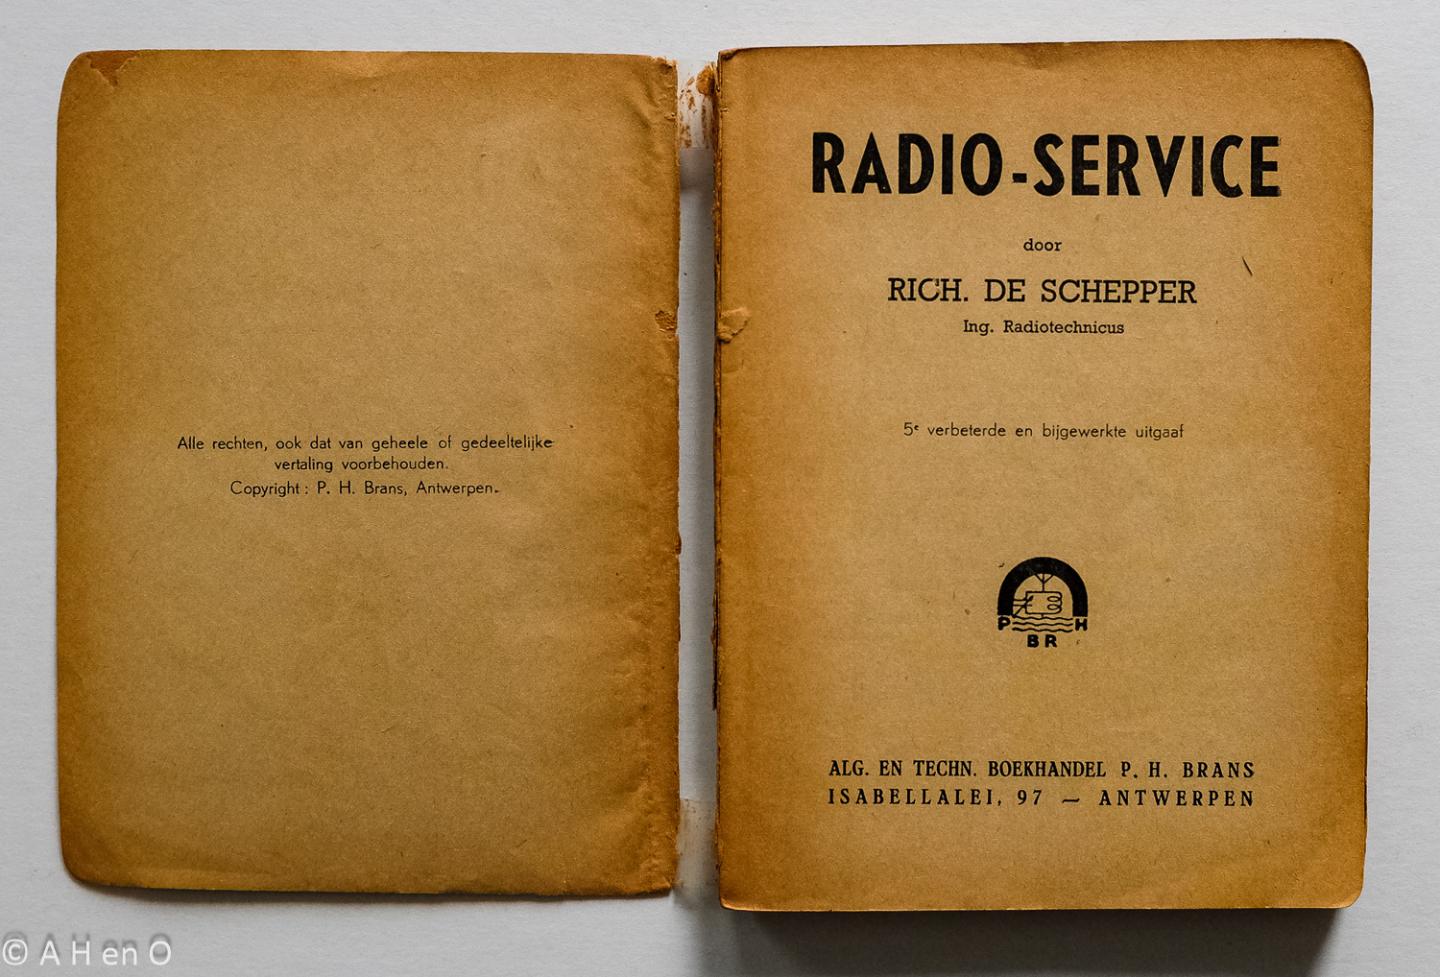 De Schepper, Rich. - Radio-service handboek